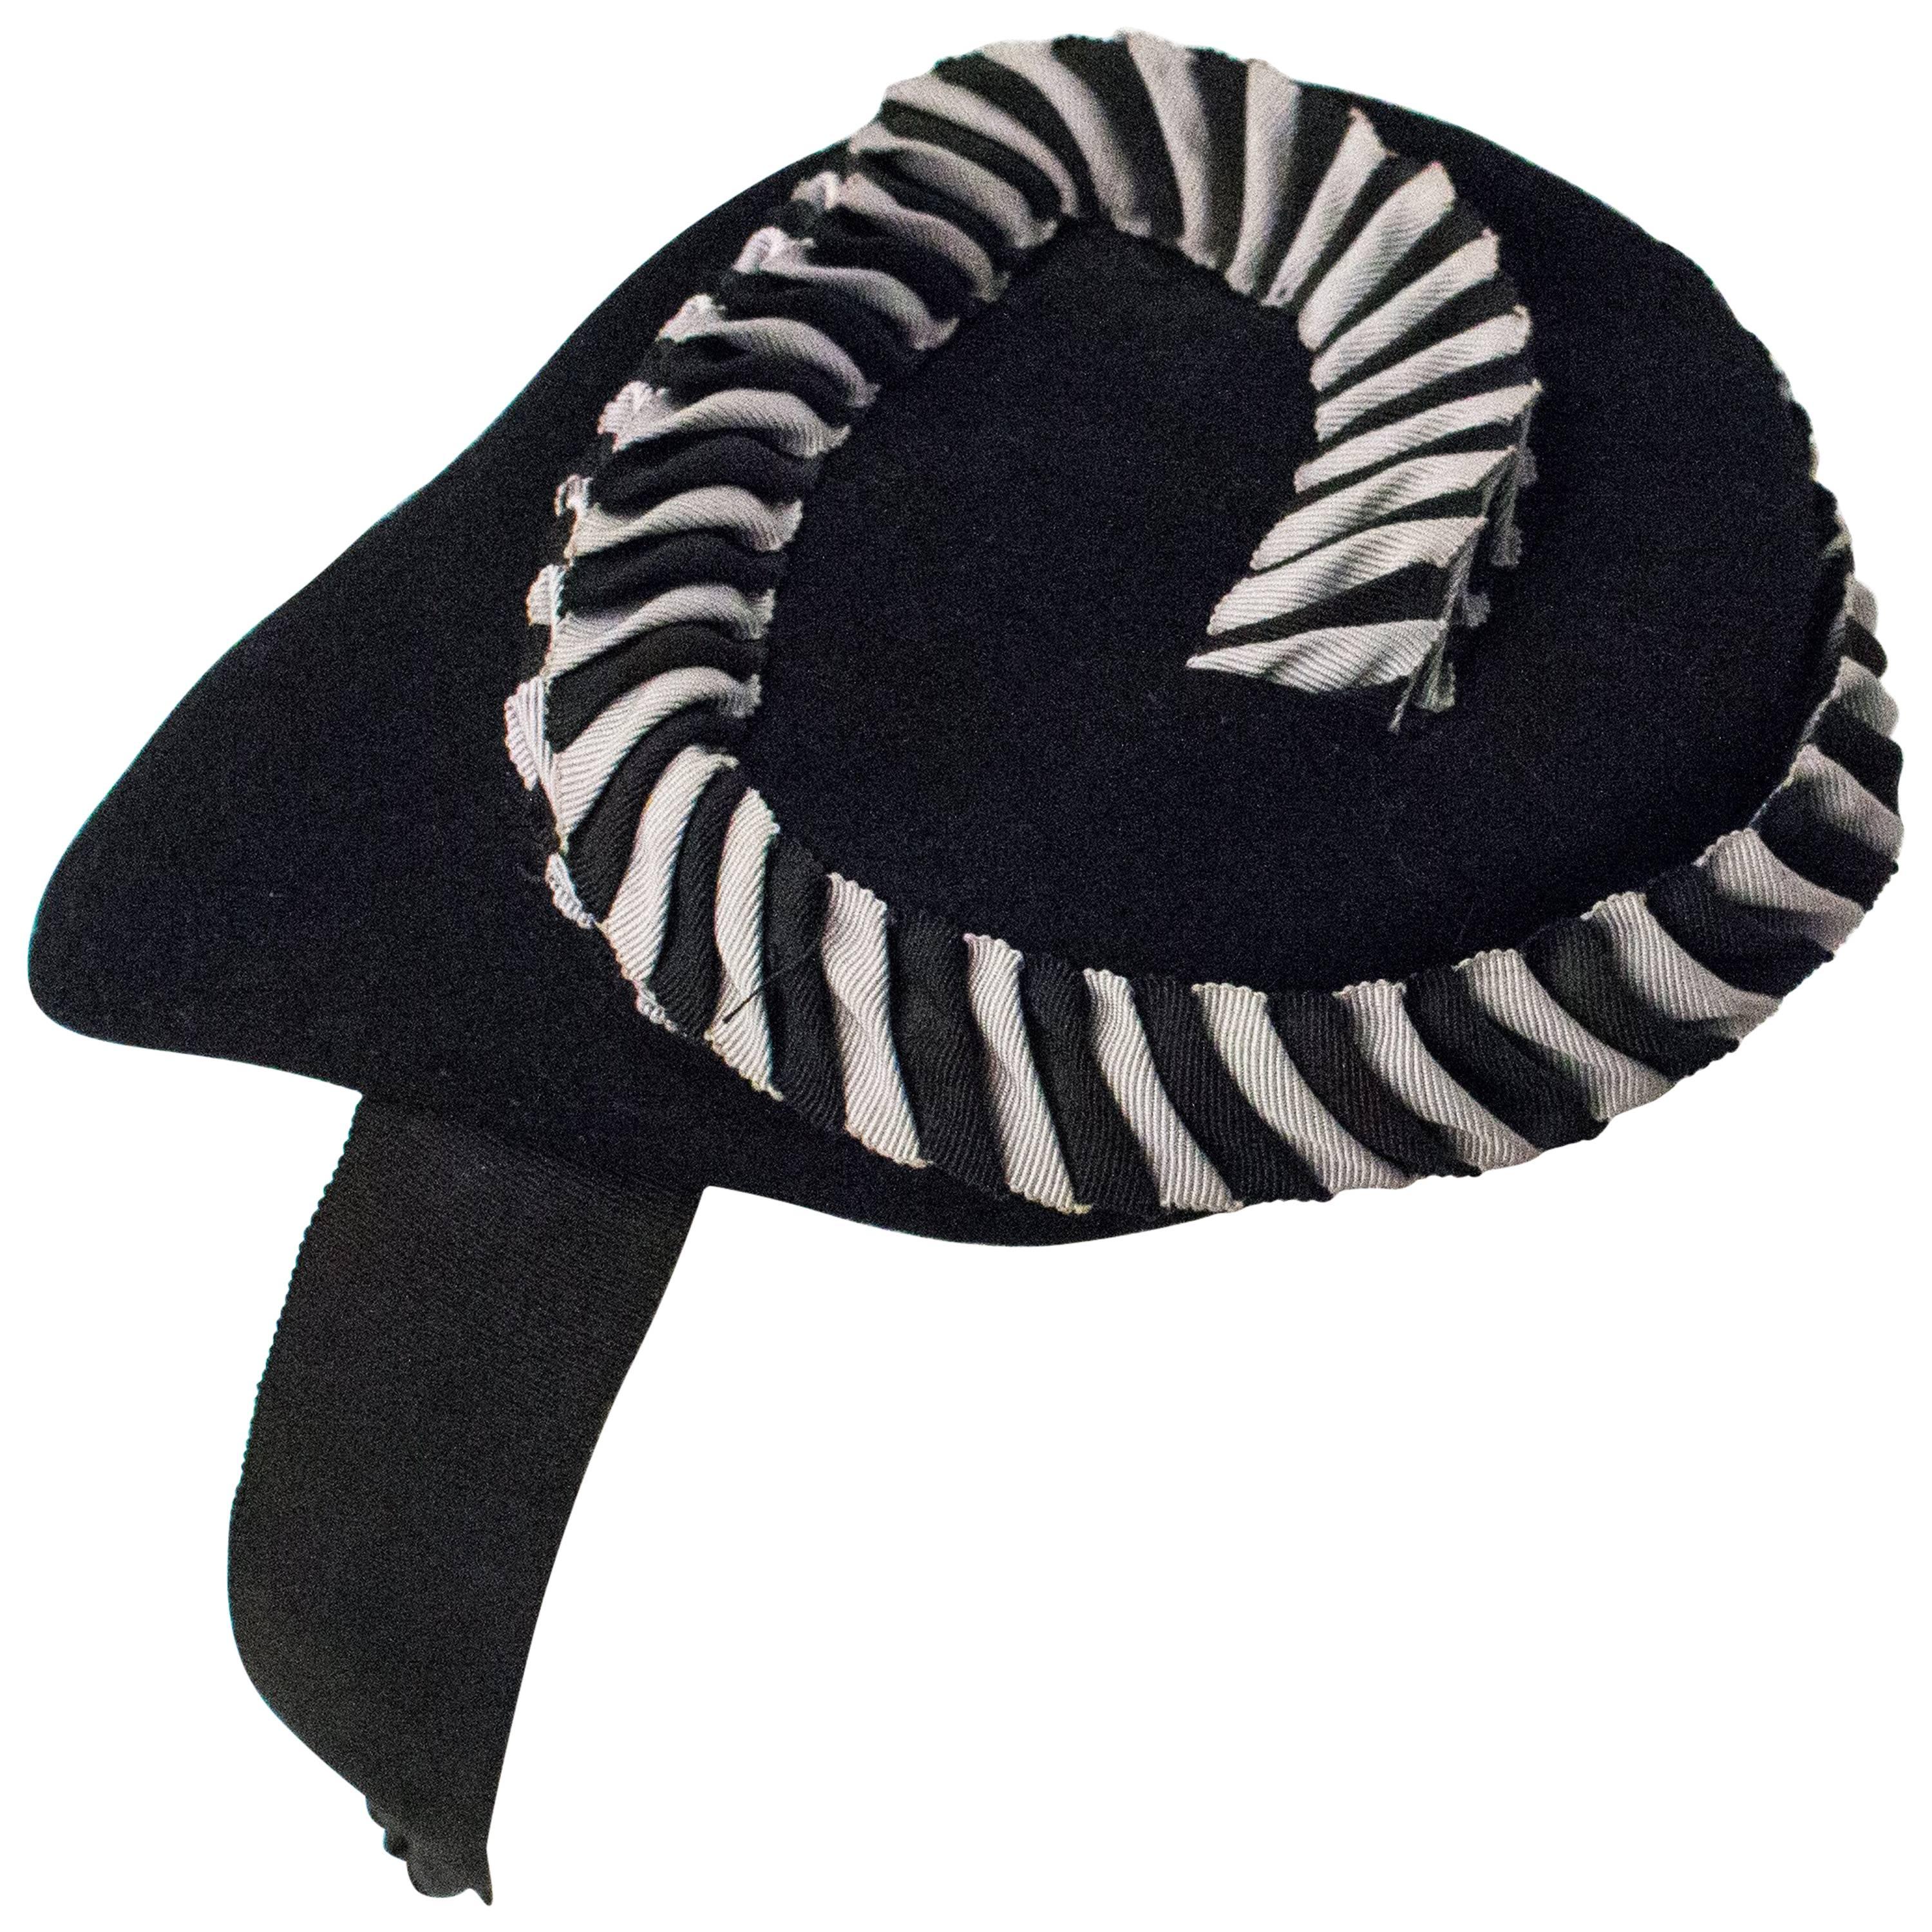 30 Black and White Swirl Fashion Hat